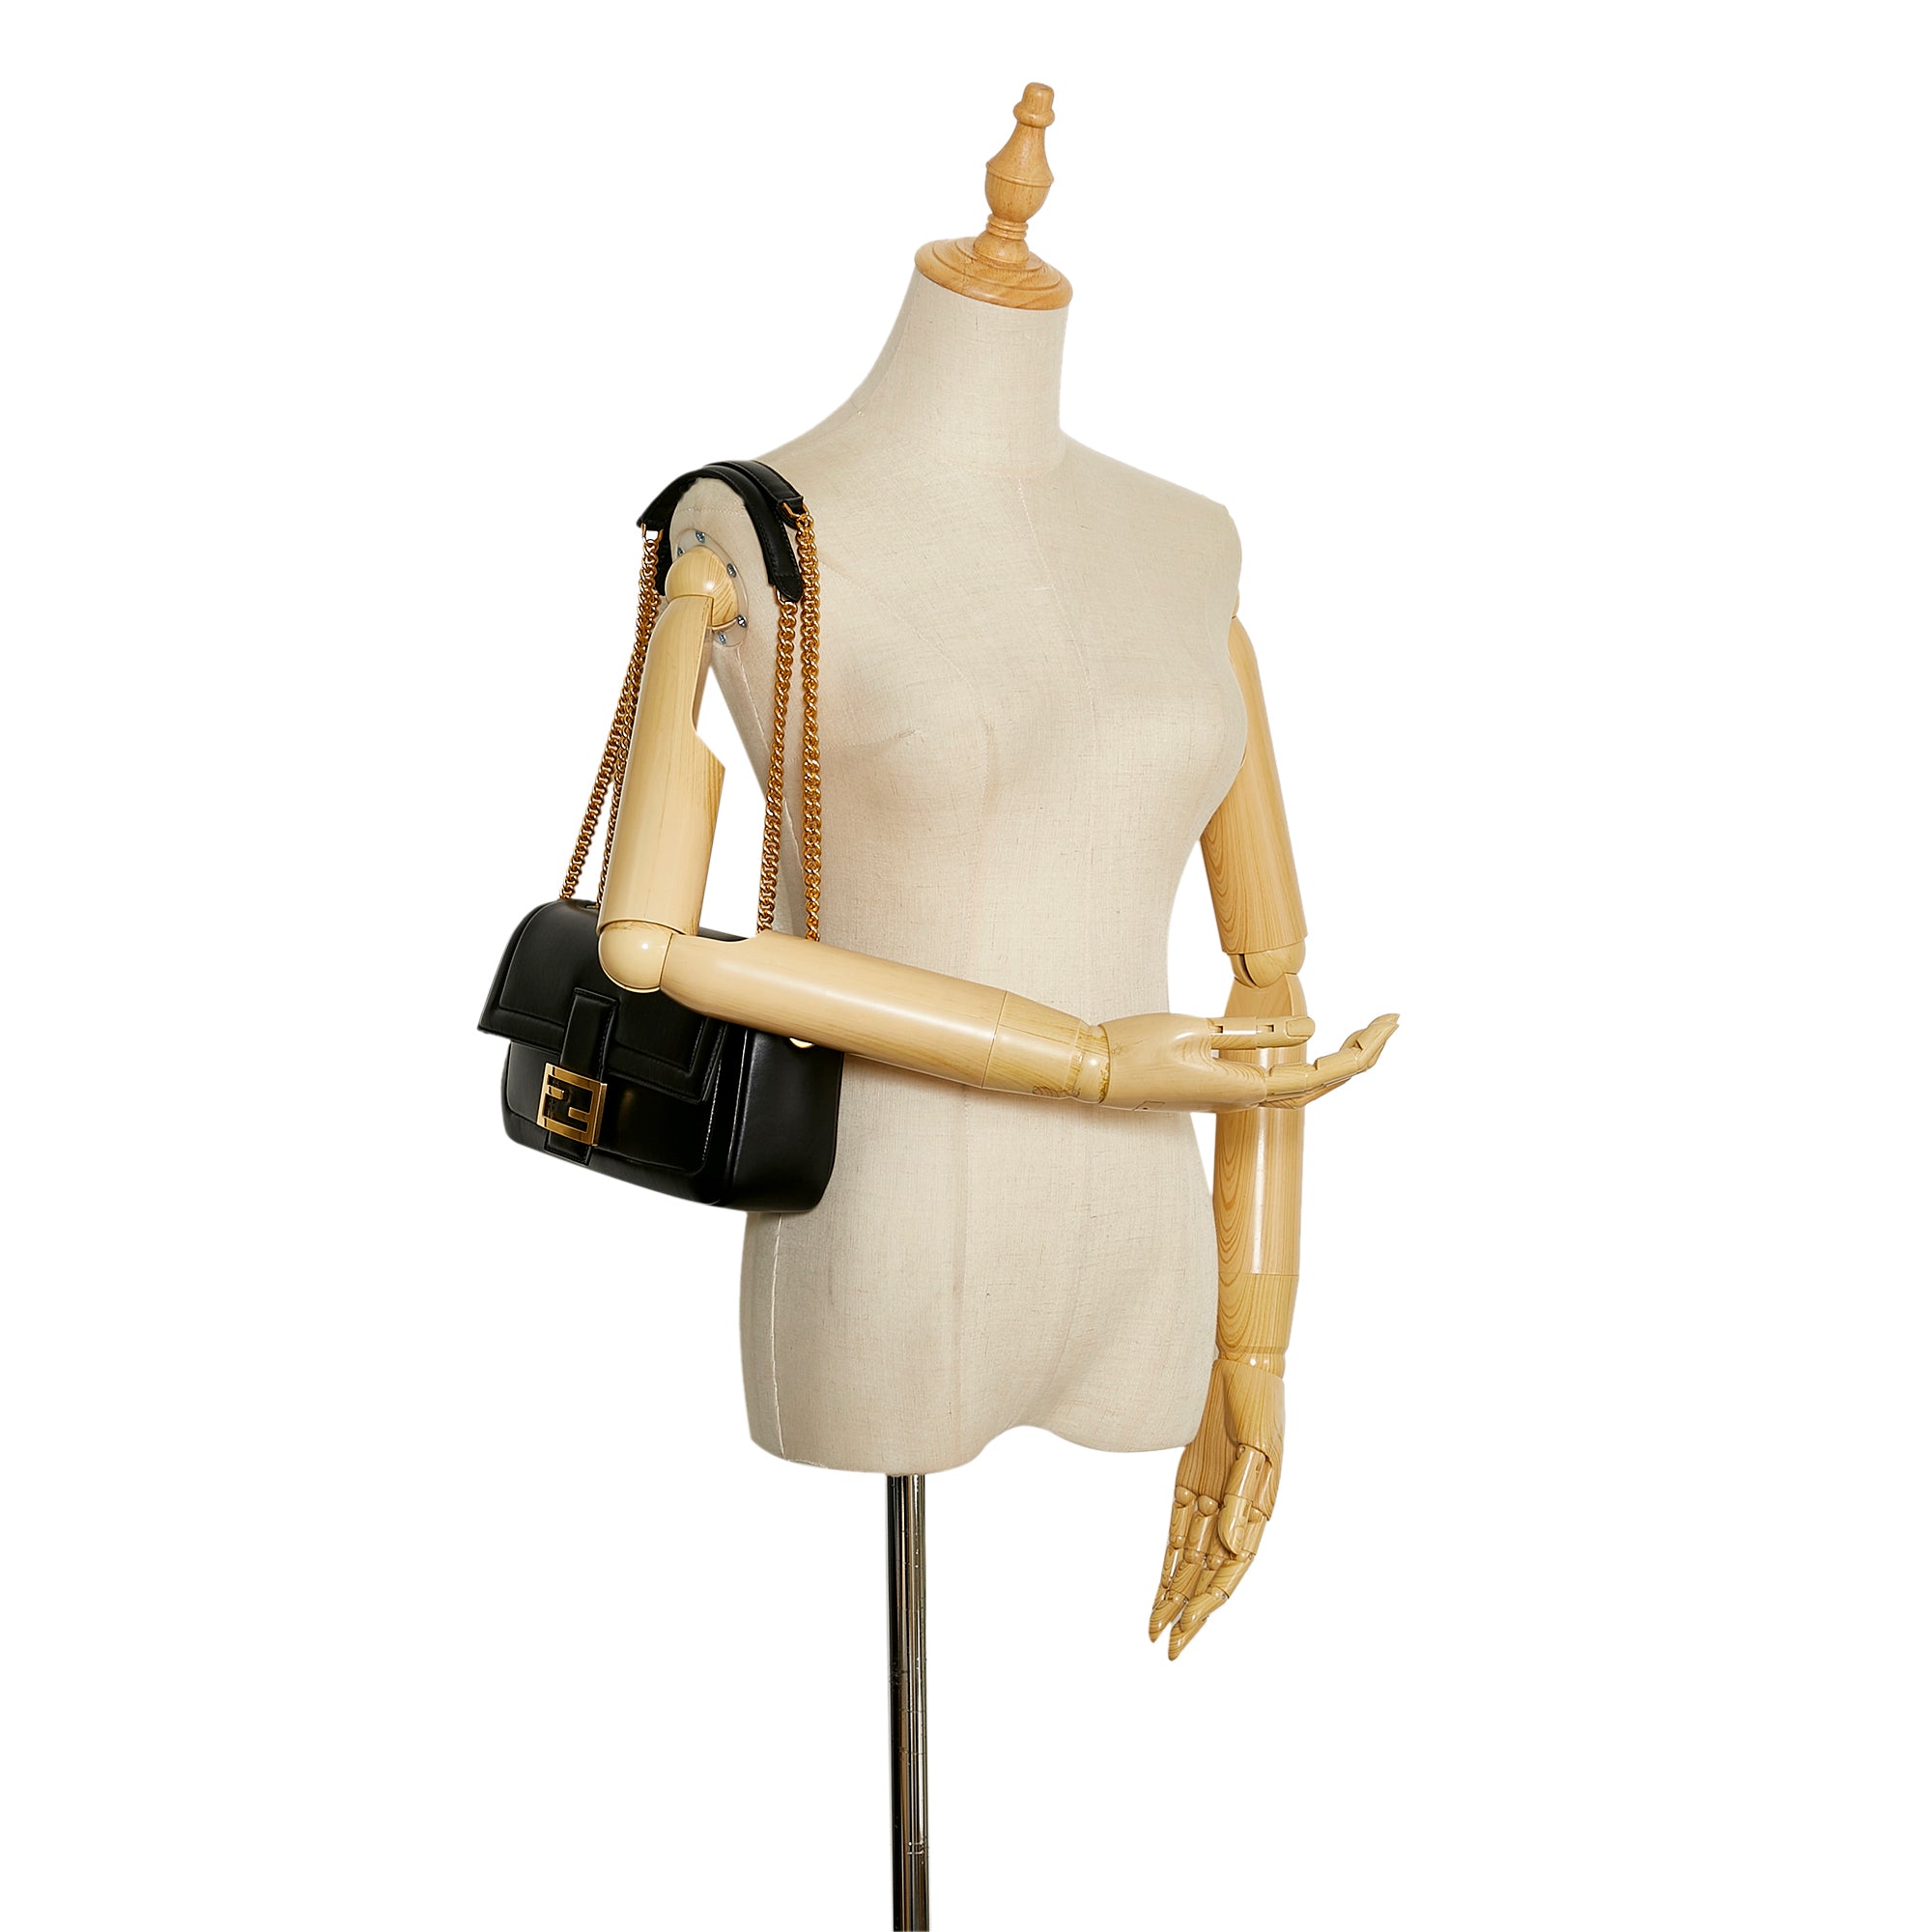 FENDI Fendi Baguette Chain Bag in Black Nappa Leather - Vault 55